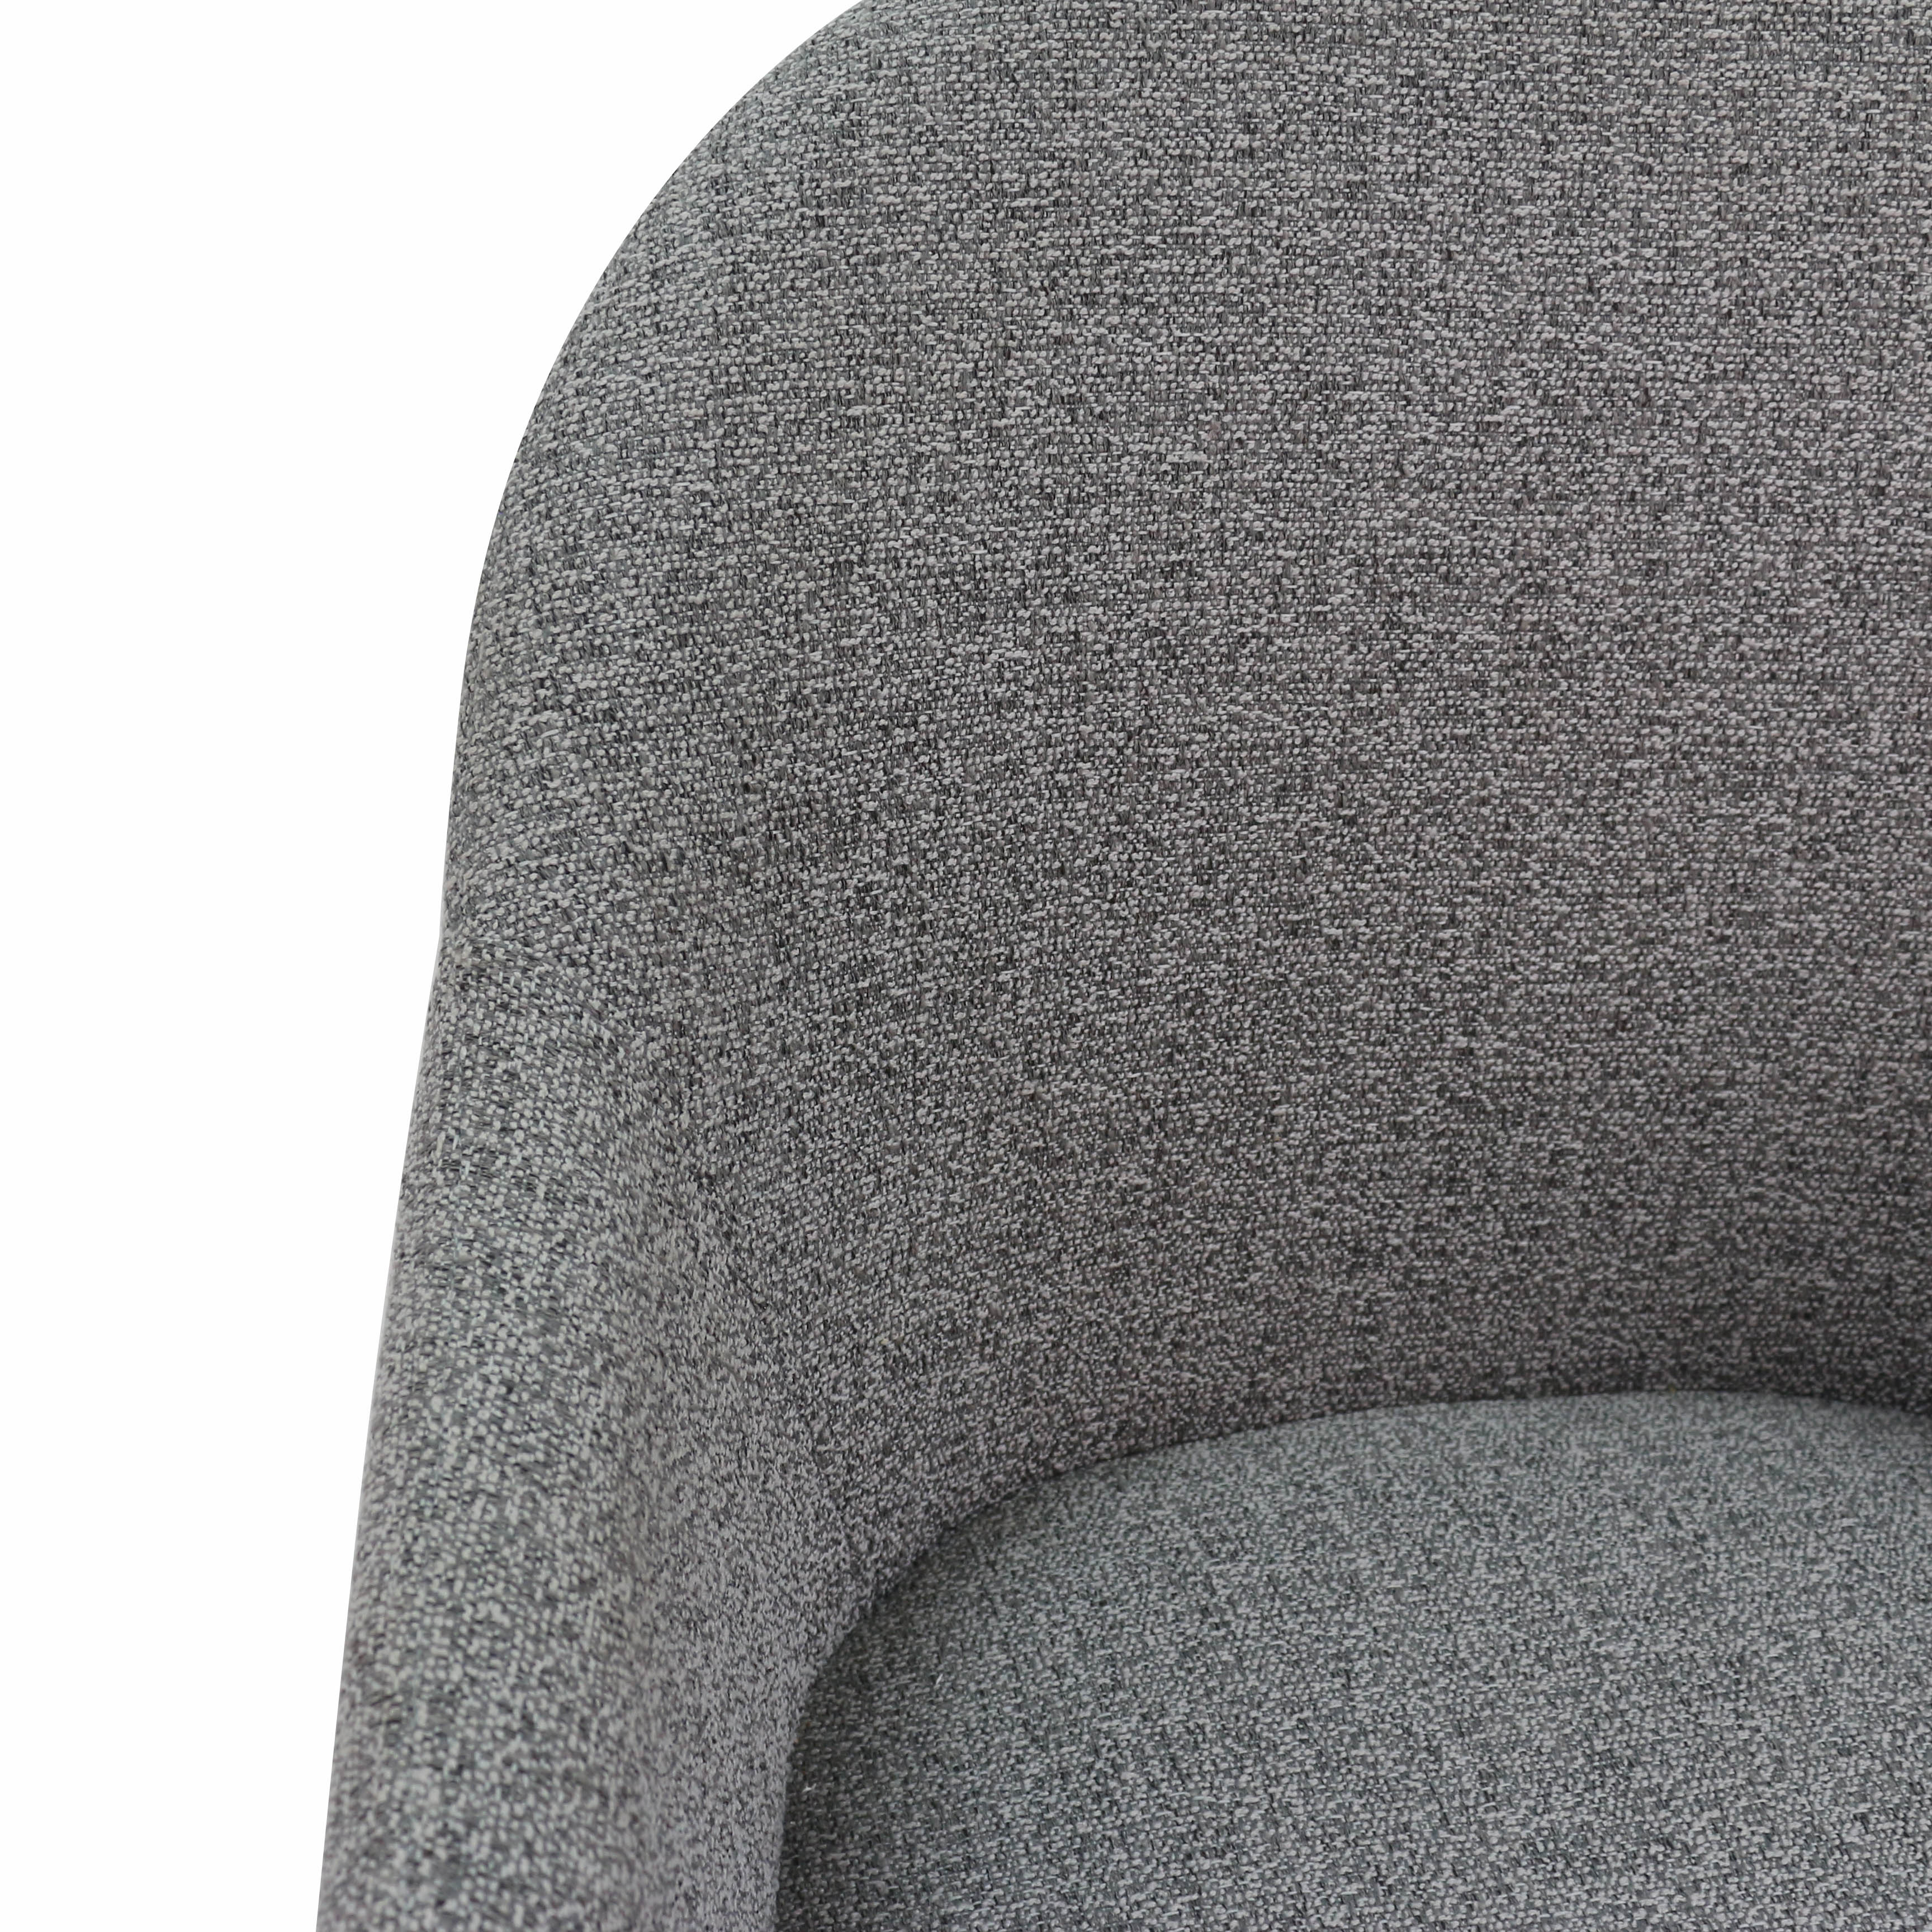 Grey linen Metal Leg Living Chair for dining room or living room